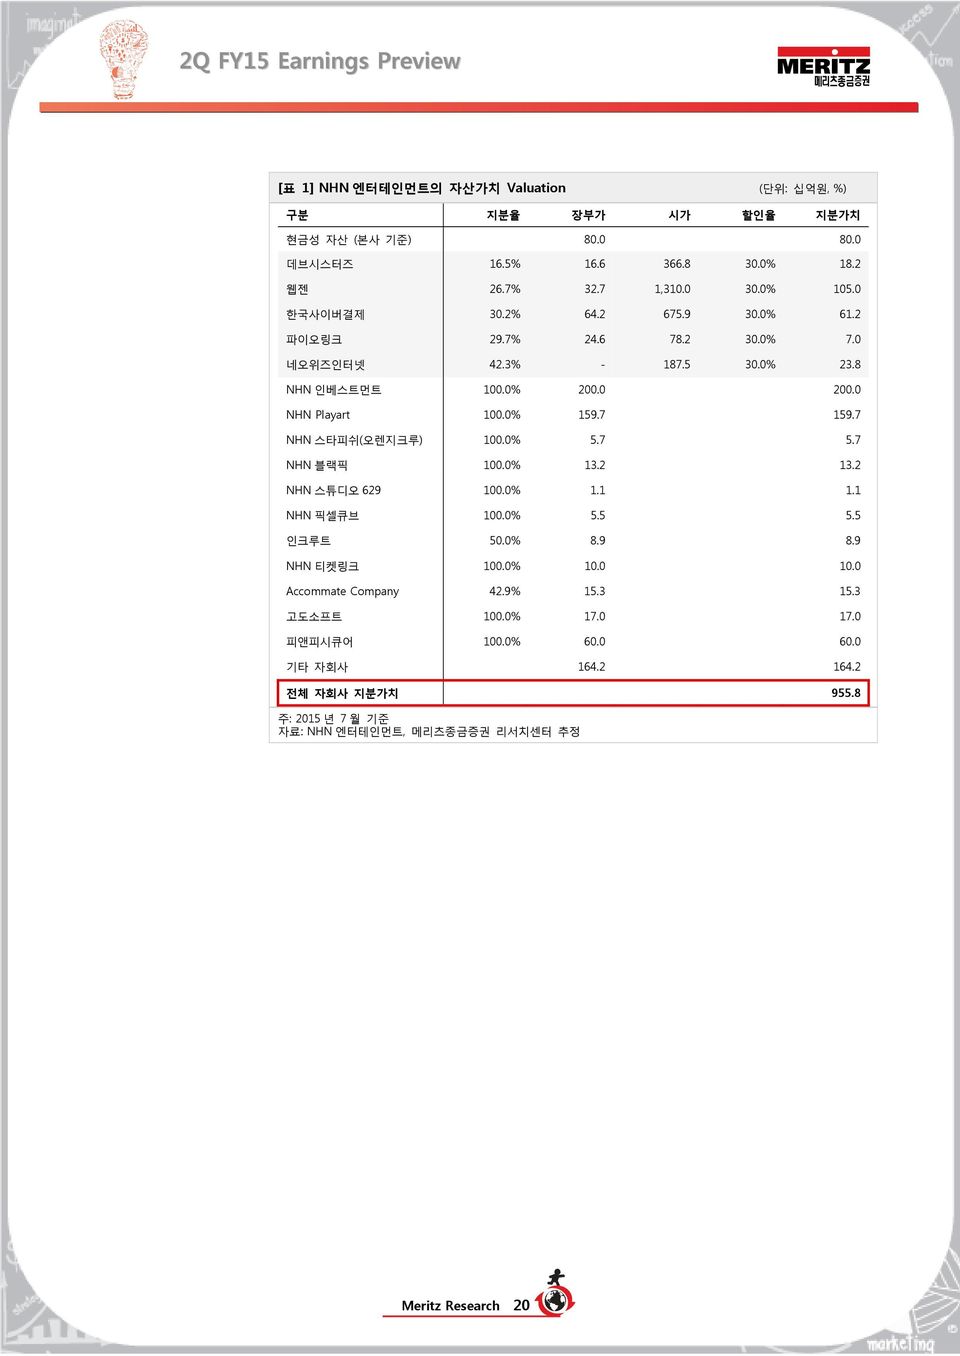 7 NHN 스타피쉬(오렌지크루) 1.% 5.7 5.7 NHN 블랙픽 1.% 13.2 13.2 NHN 스튜디오 629 1.% 1.1 1.1 NHN 픽셀큐브 1.% 5.5 5.5 인크루트 5.% 8.9 8.9 NHN 티켓링크 1.% 1. 1. Accommate Company 42.